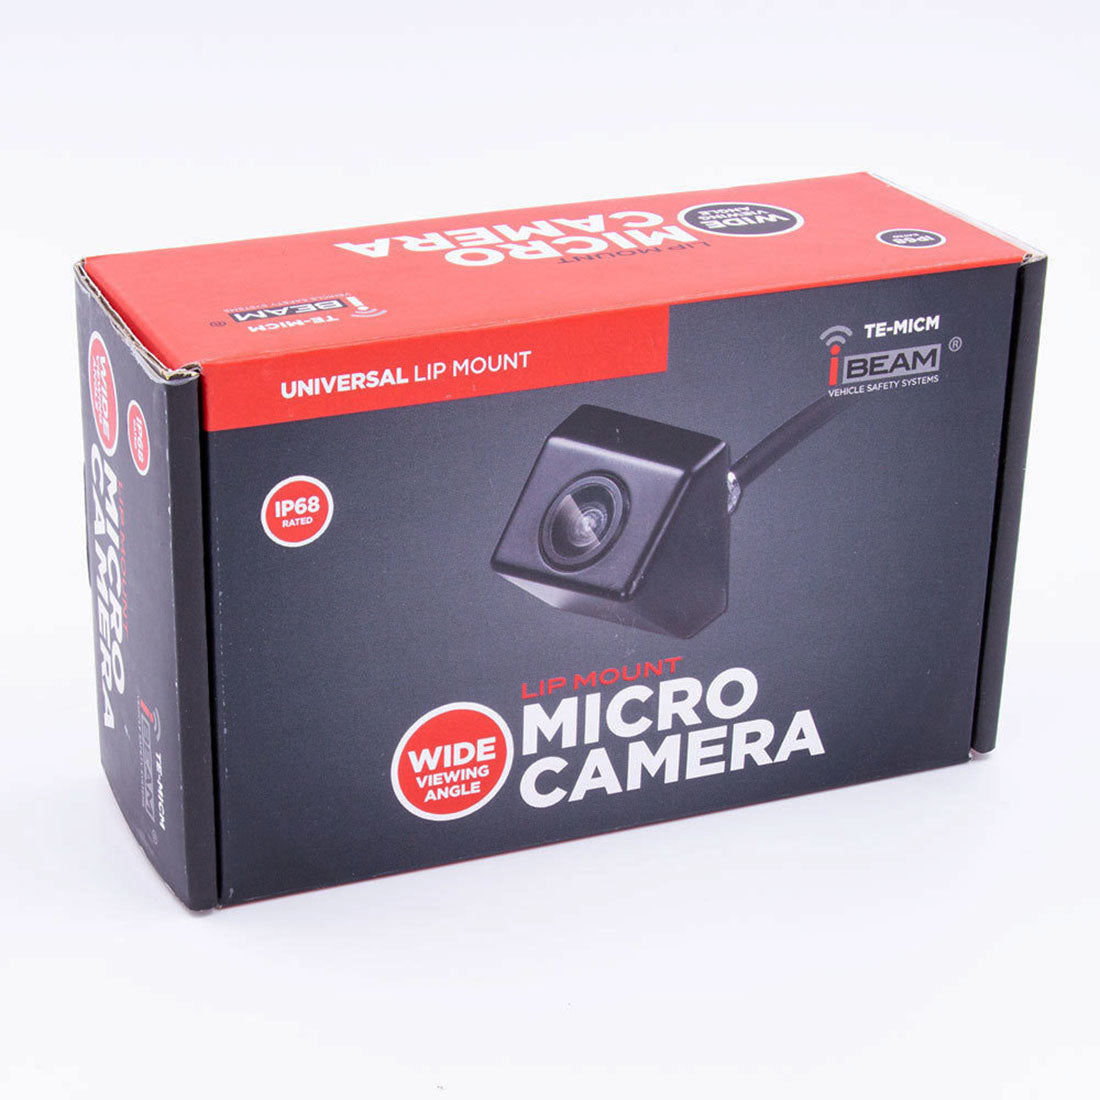 iBeam TE-MICM Universal Lip Mount Fixed Angle IP68 CMOS Micro Camera - Black